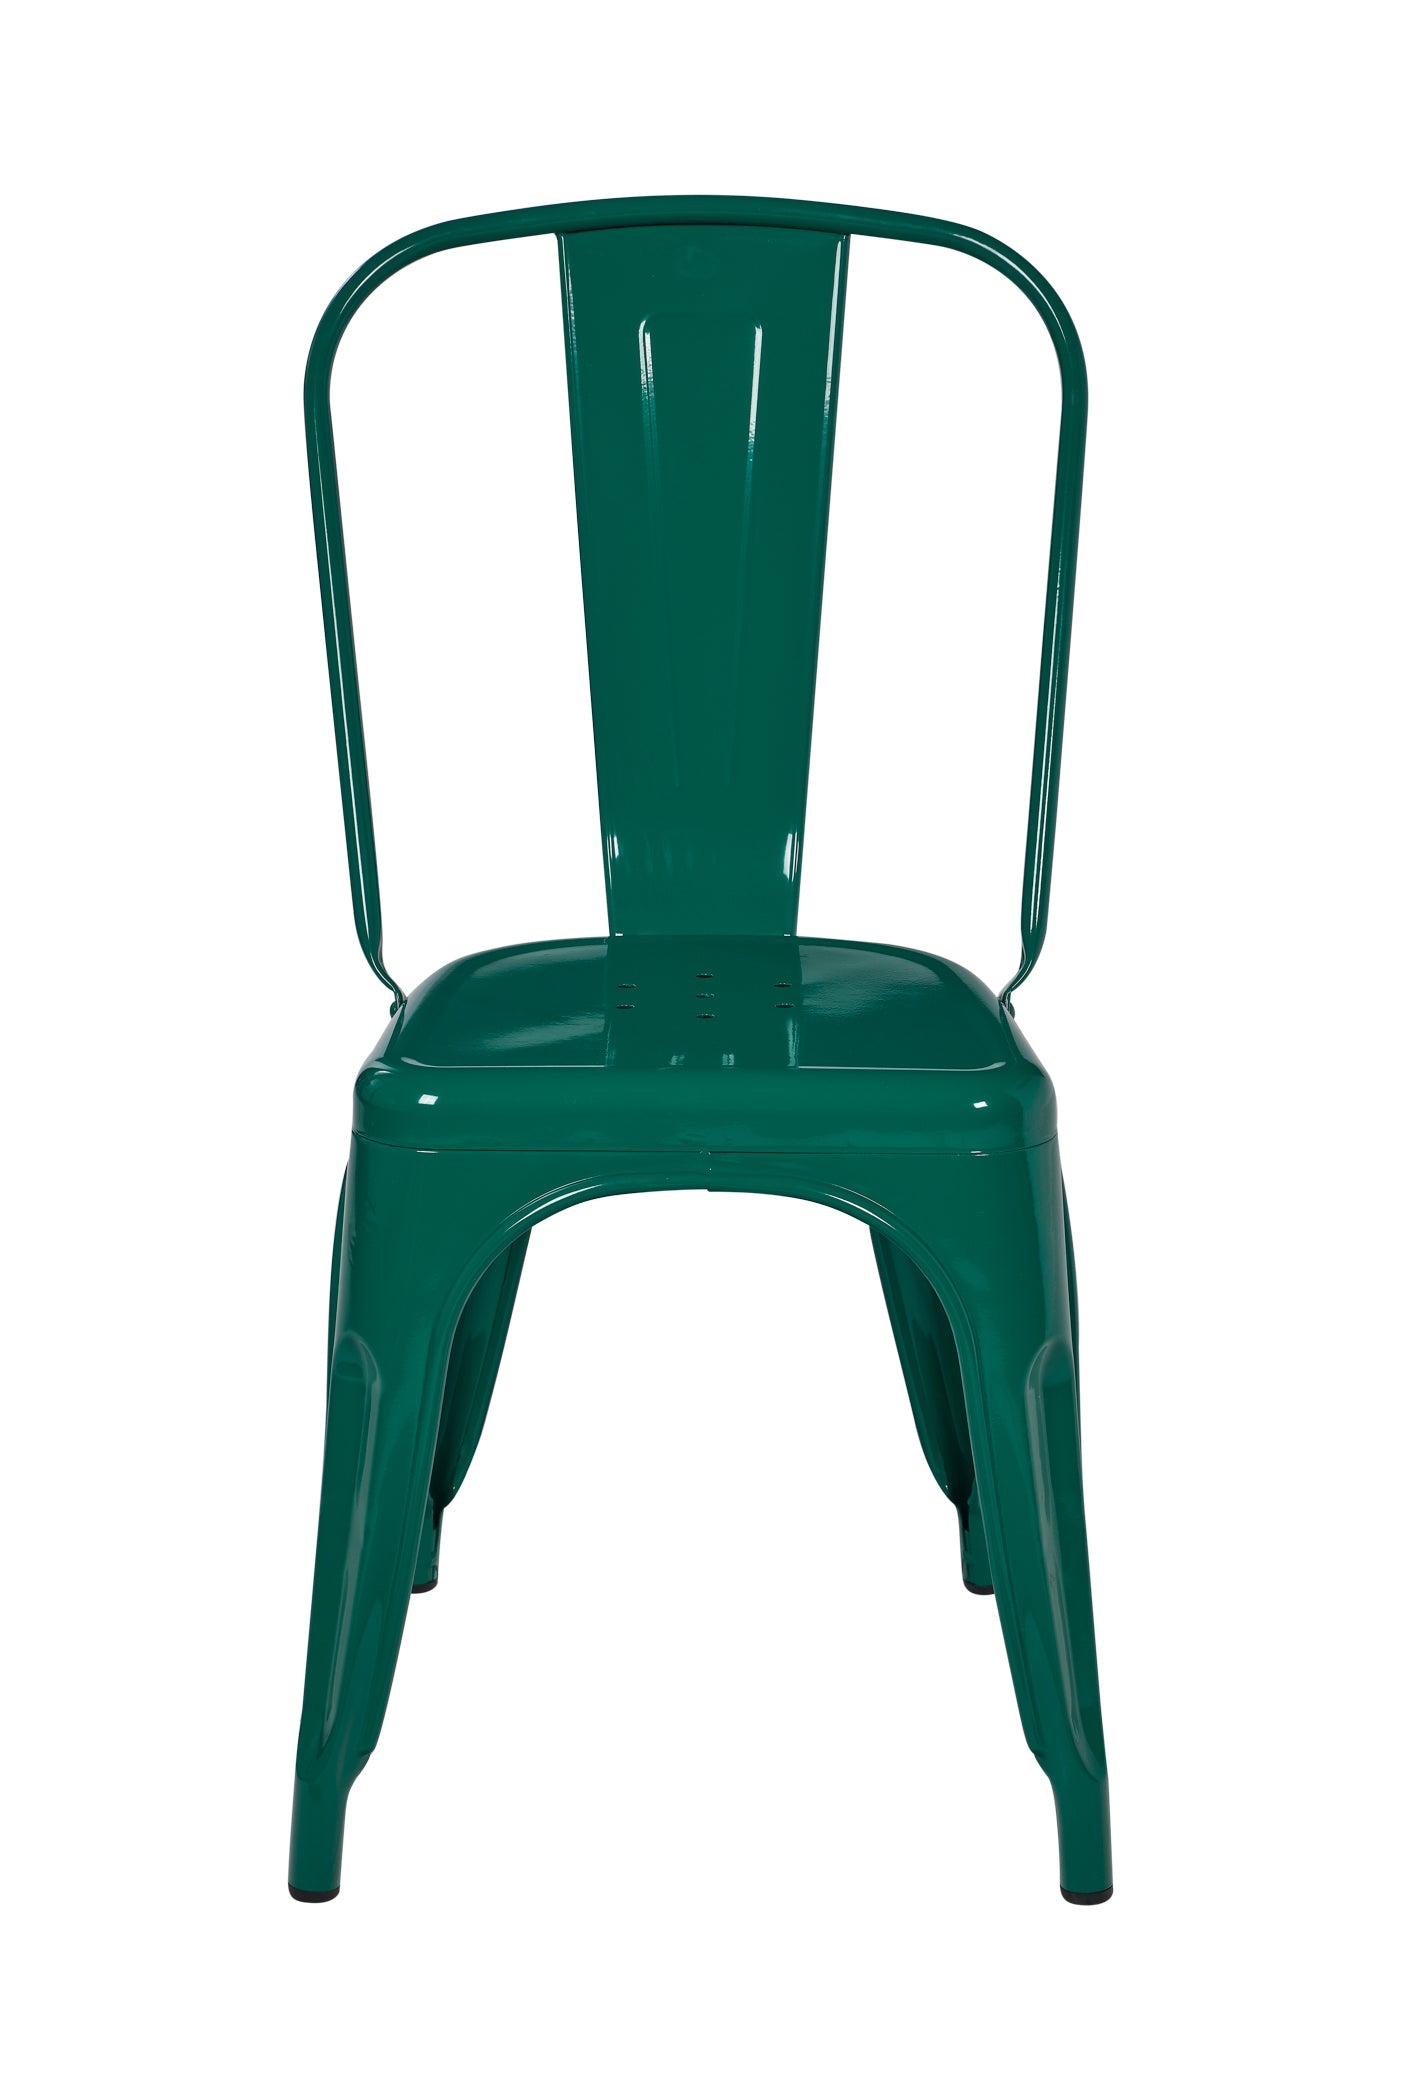 Novita home_AK-21_Cindy - sedia in metallo color verde - impilabile_1